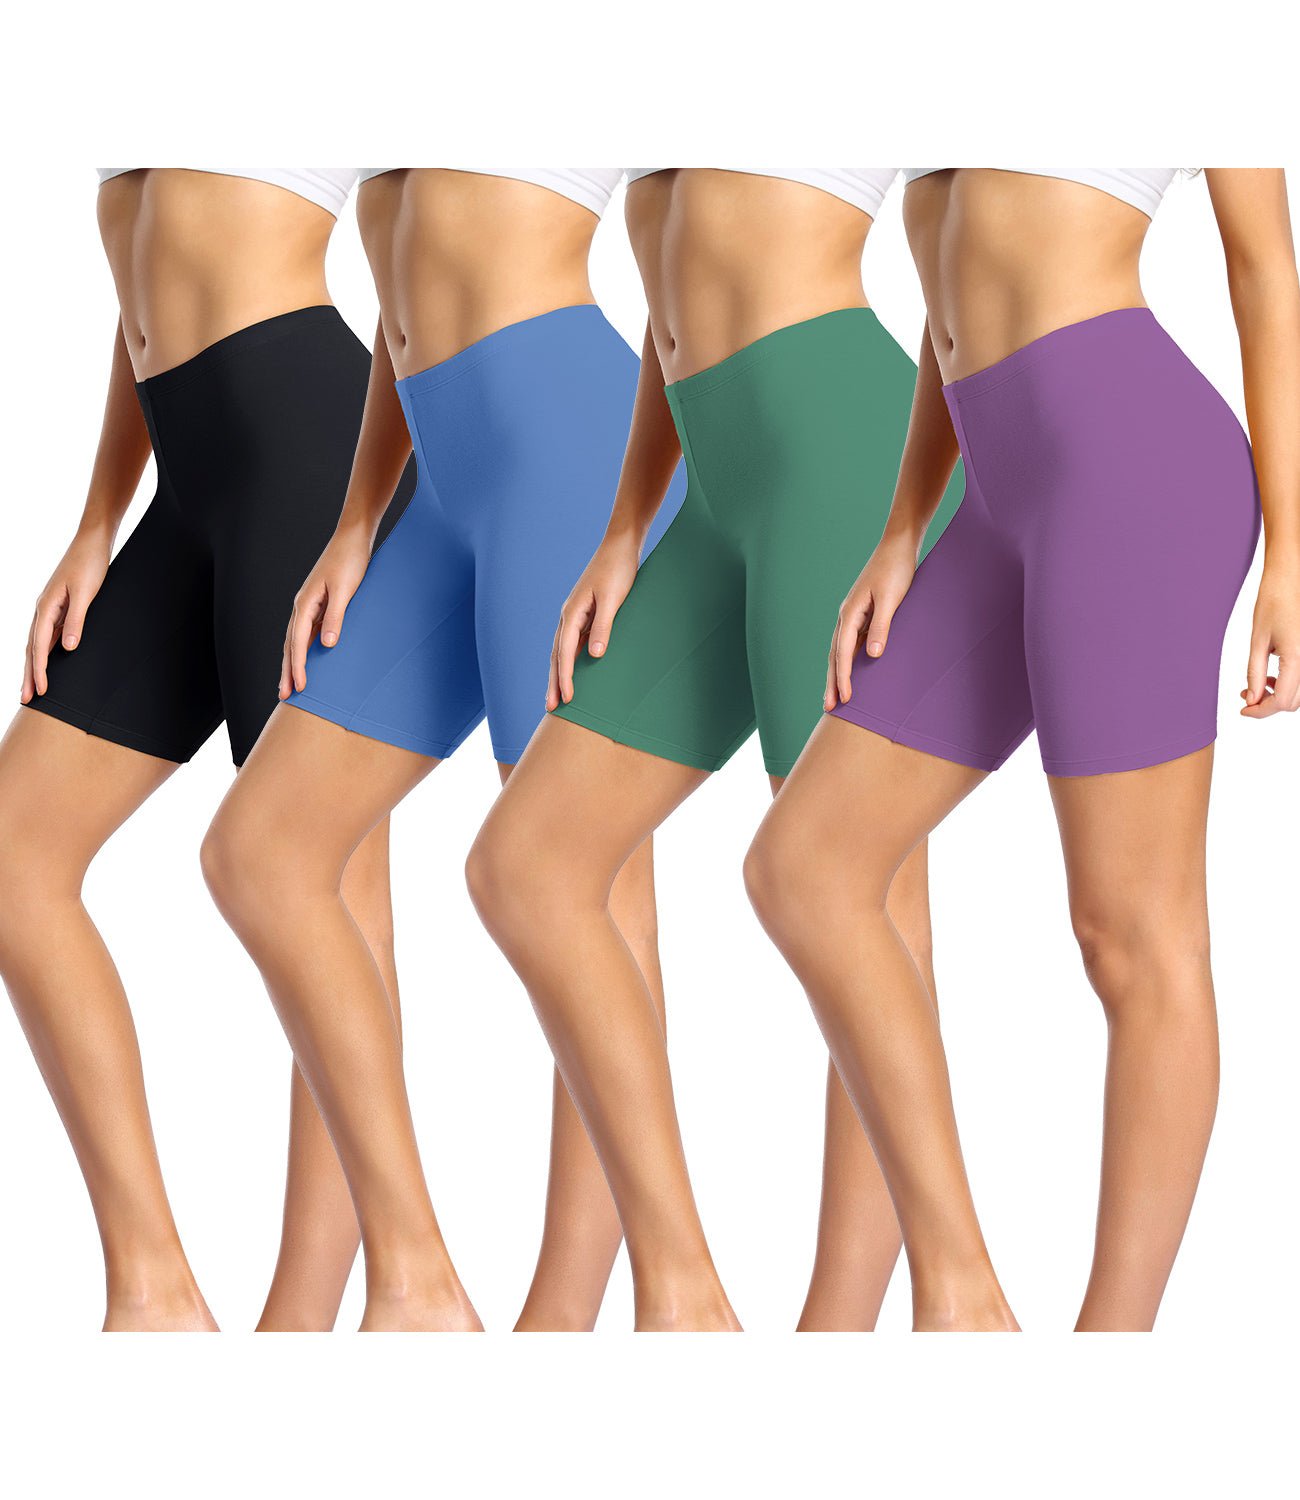 wirarpa Women’s Chafe Free Cotton Safety Shorts Boyshorts 4 Pack - Wirarpa Apparel, Inc.